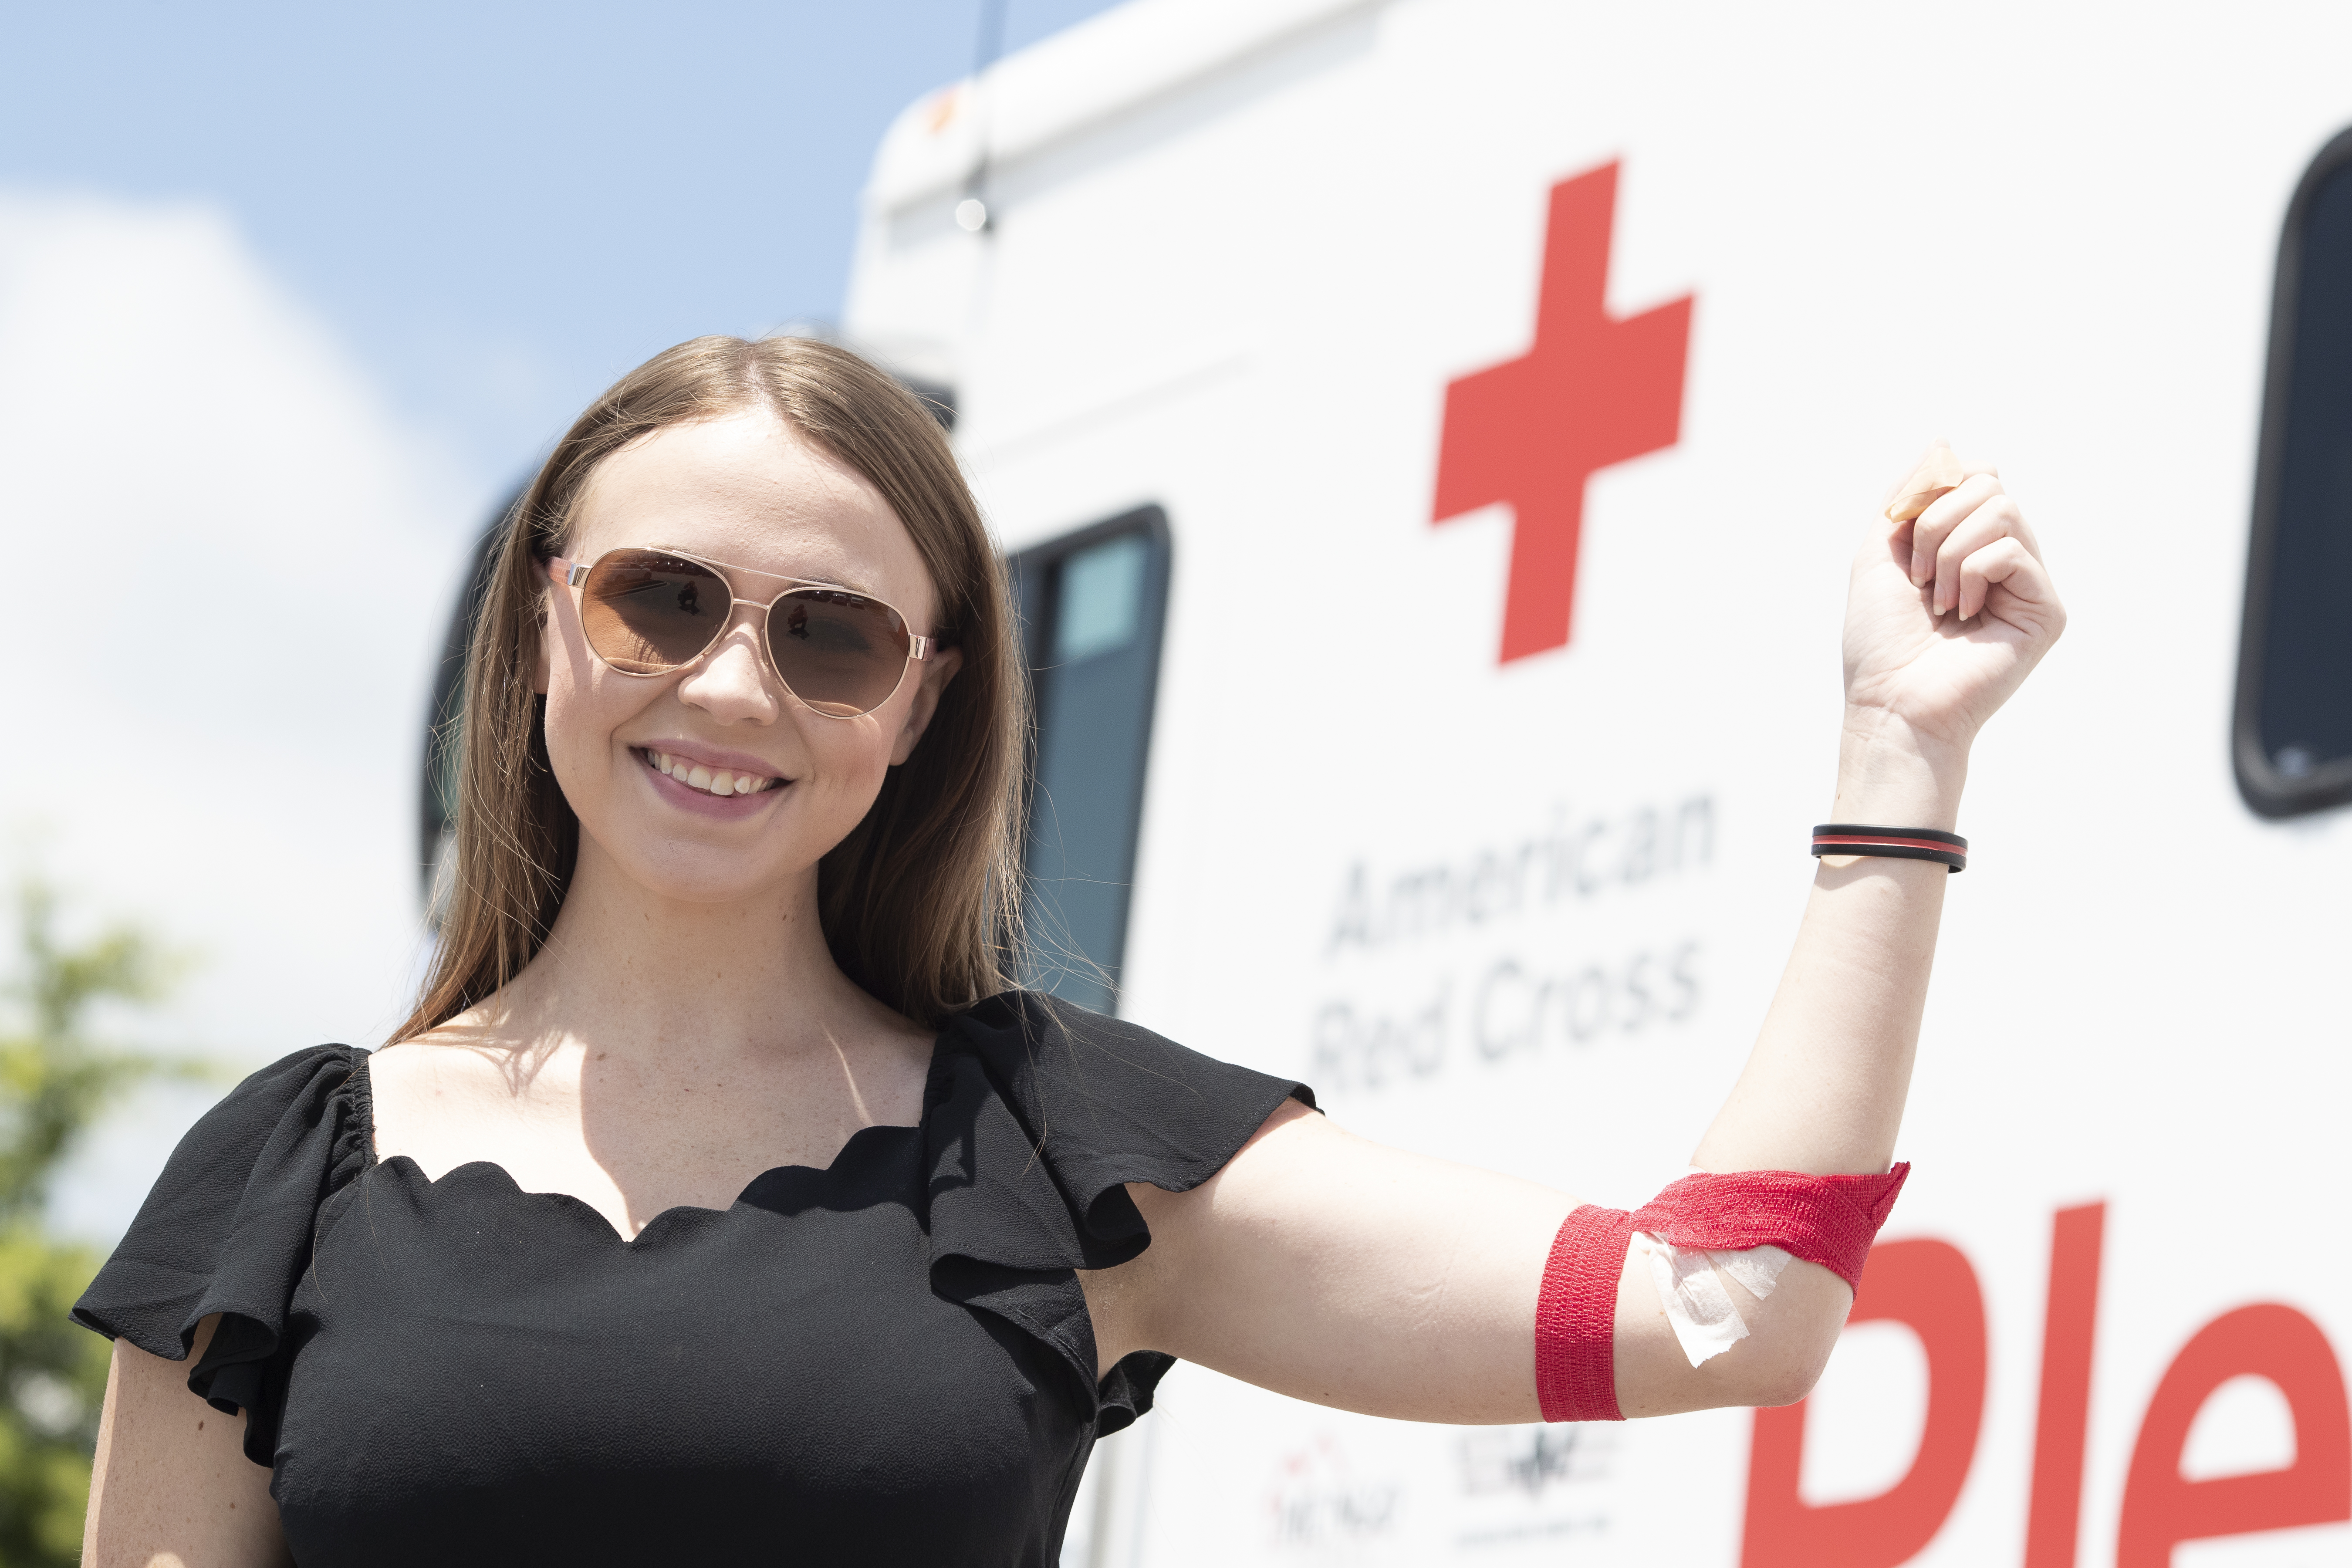 Bloodmobile Blood Drive Columbia, South Carolina 2018 - red cross